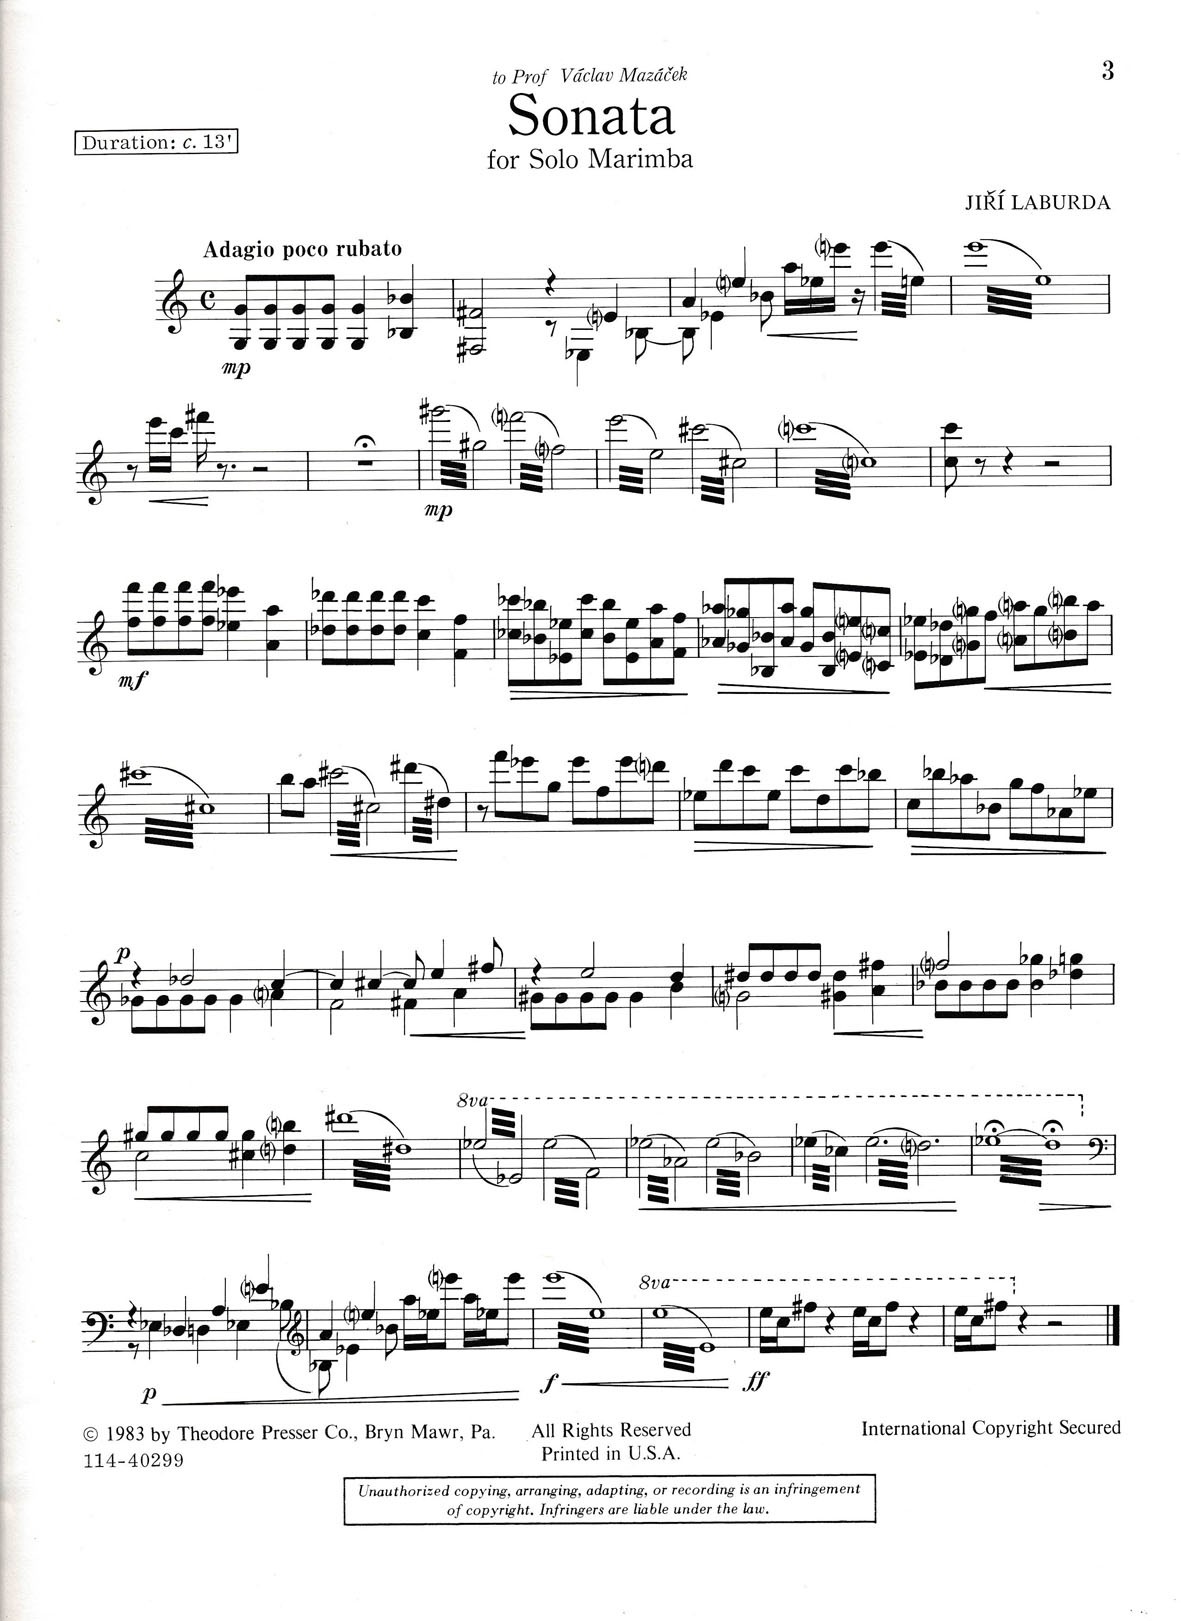 Sonata for Solo Marimba by Jiri Laburda